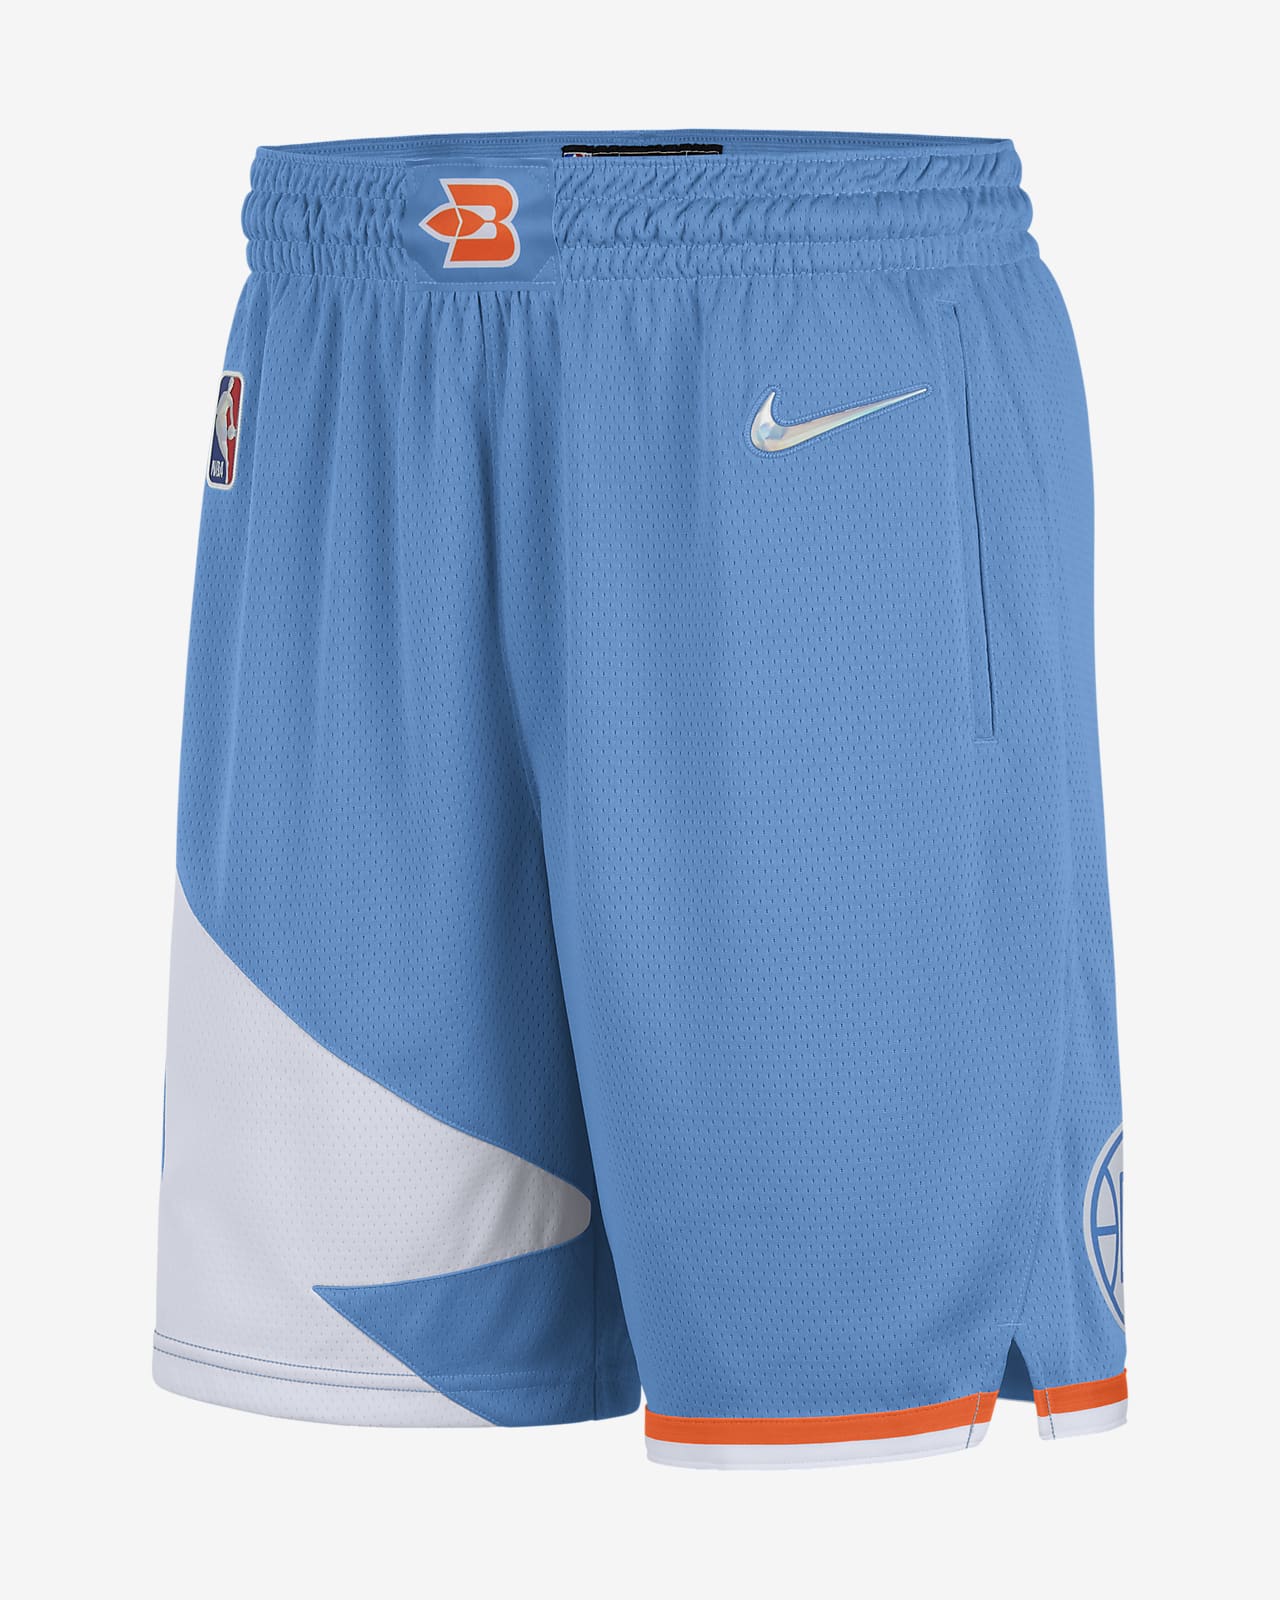 LA Clippers City Edition Men's Nike Dri-FIT NBA Swingman Shorts